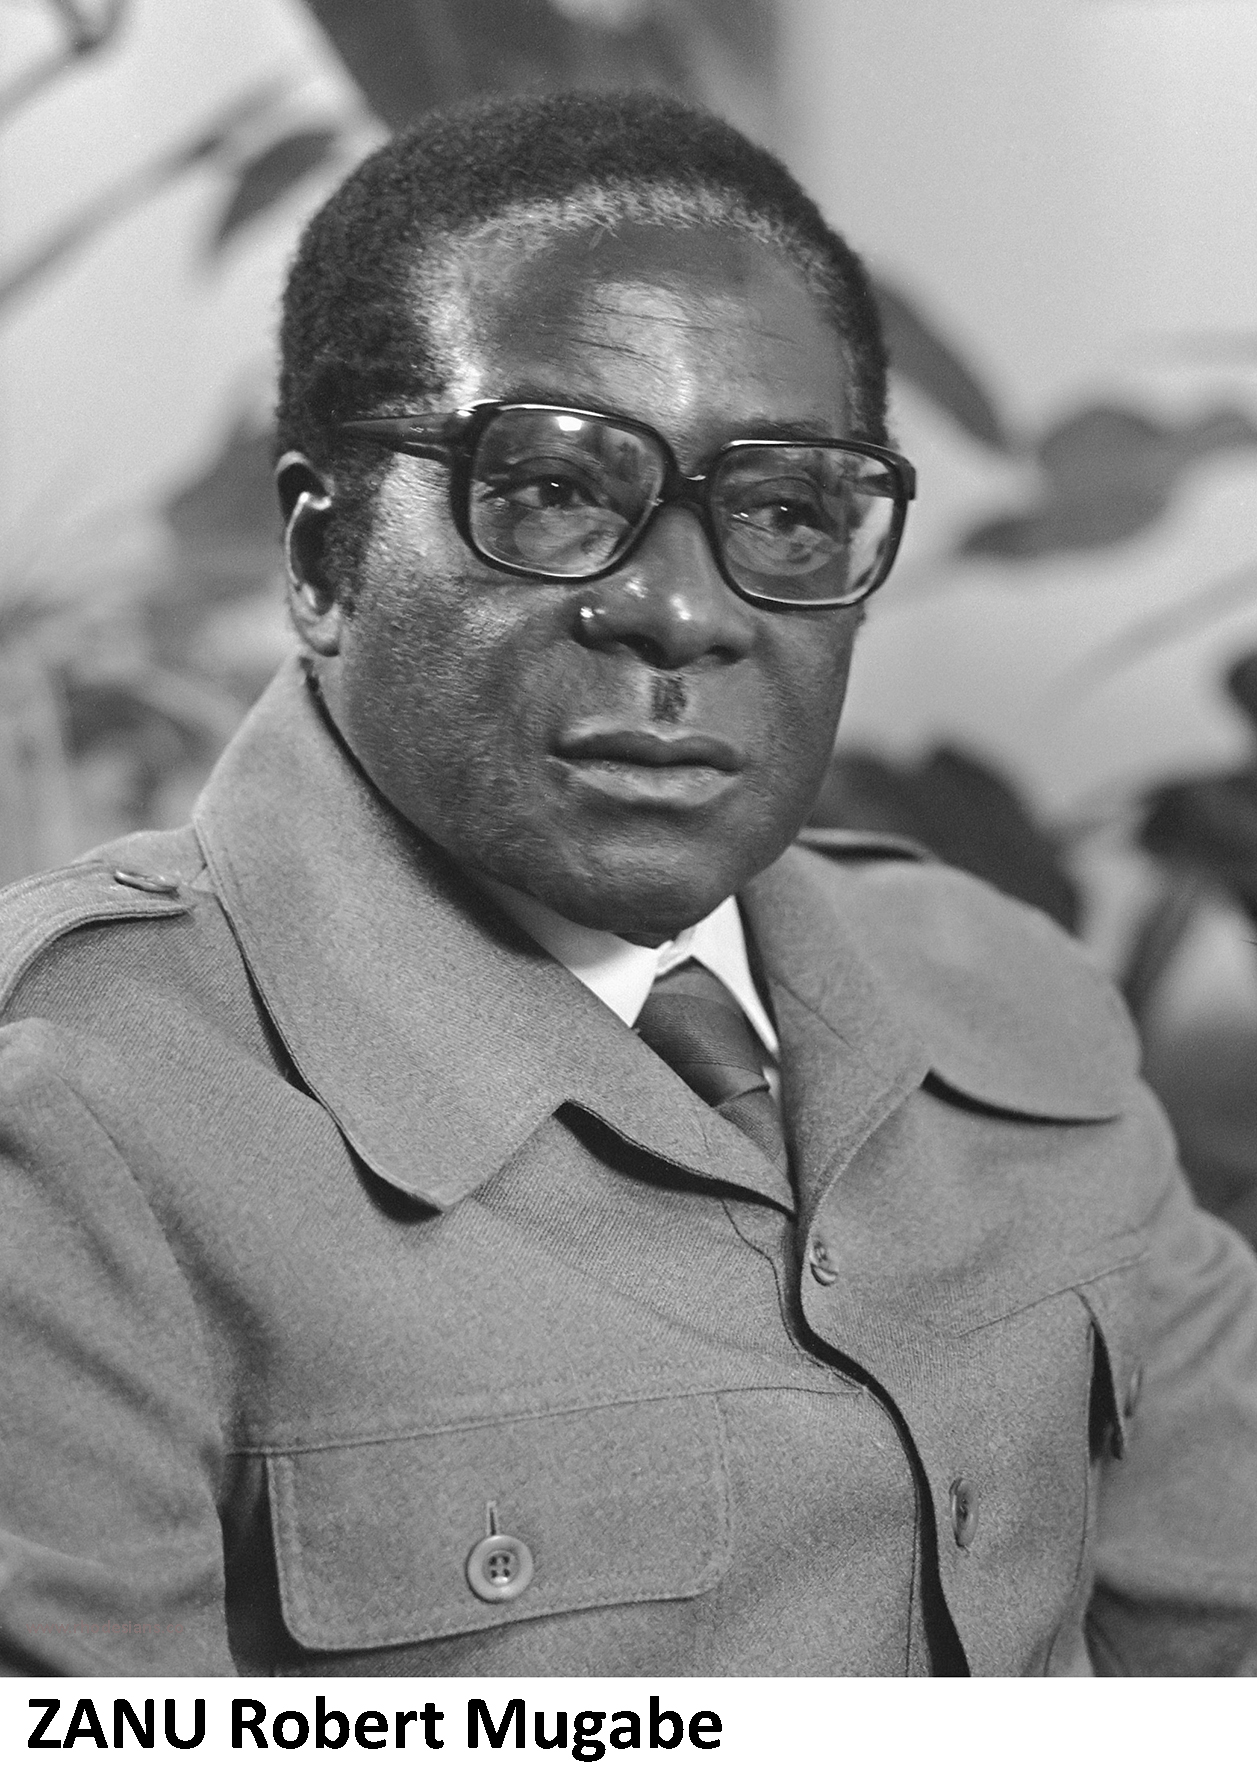 Robert Mugabe African Nationalist led ZANU and ruled Zimbabwe until deposed by a military coup